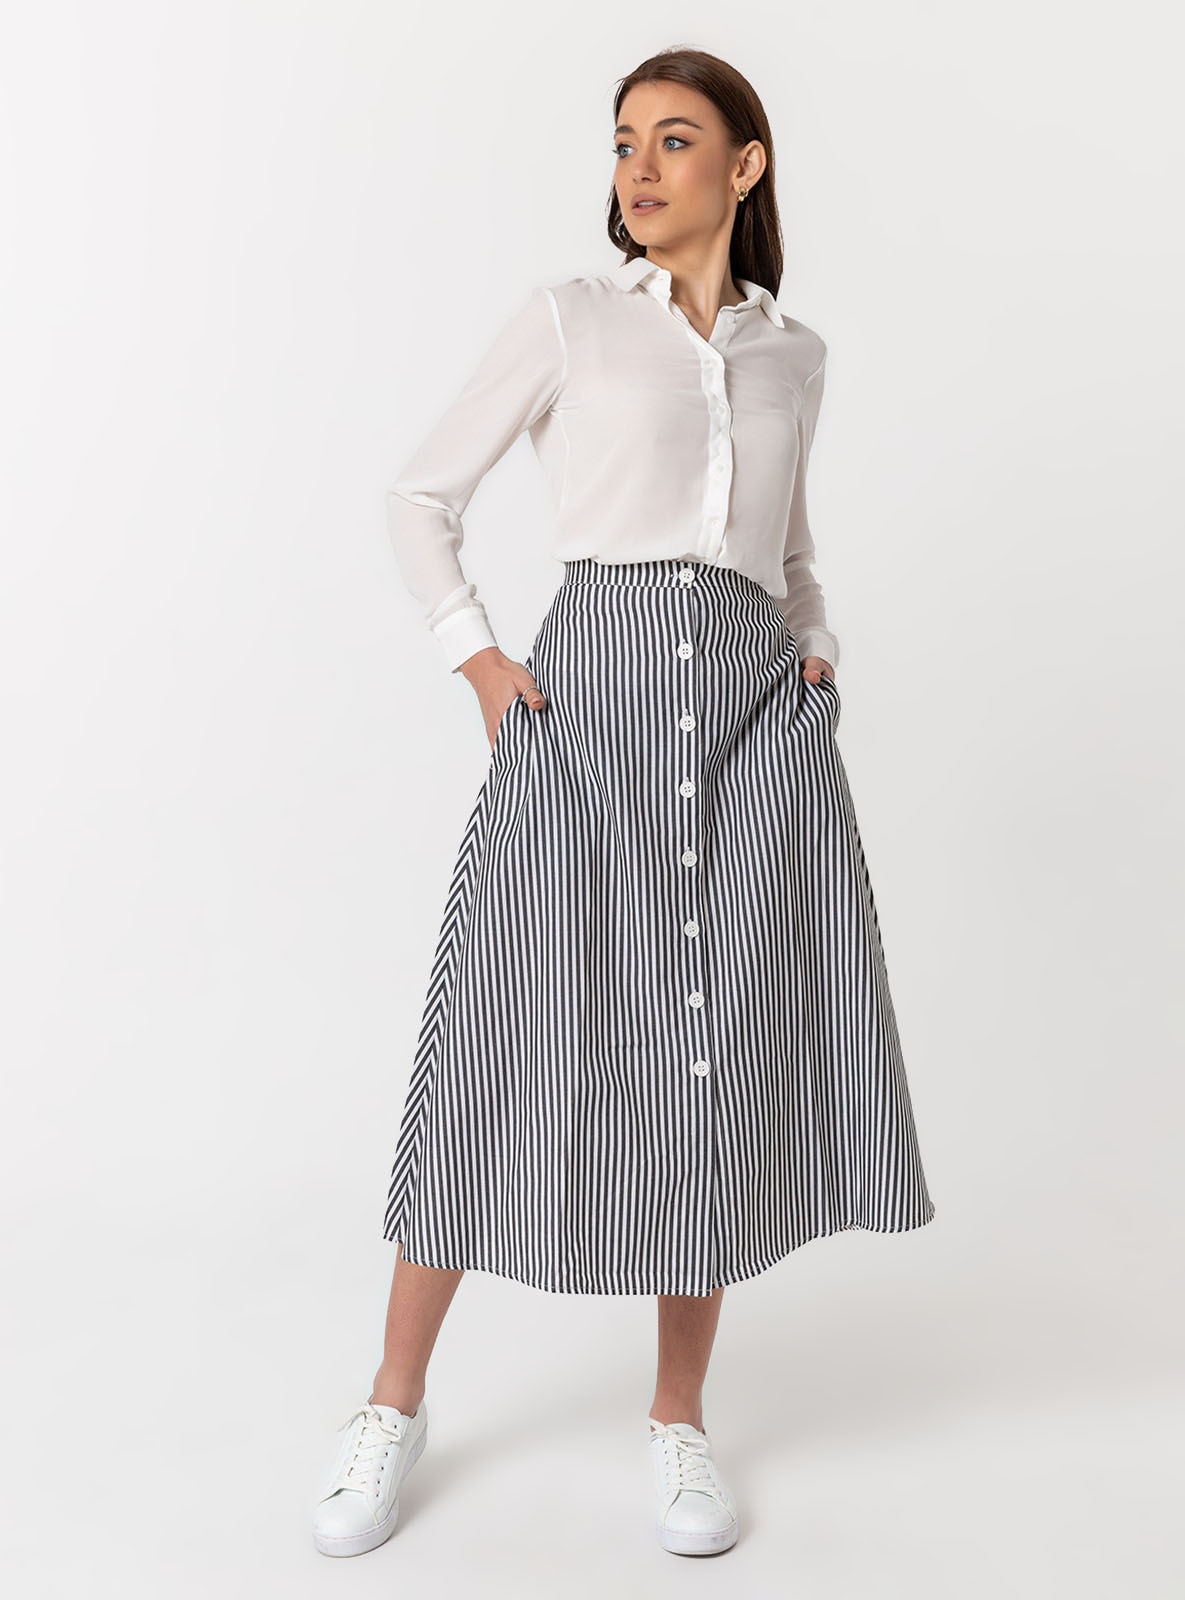 Black - Stripe - Unlined - Cotton - Skirt